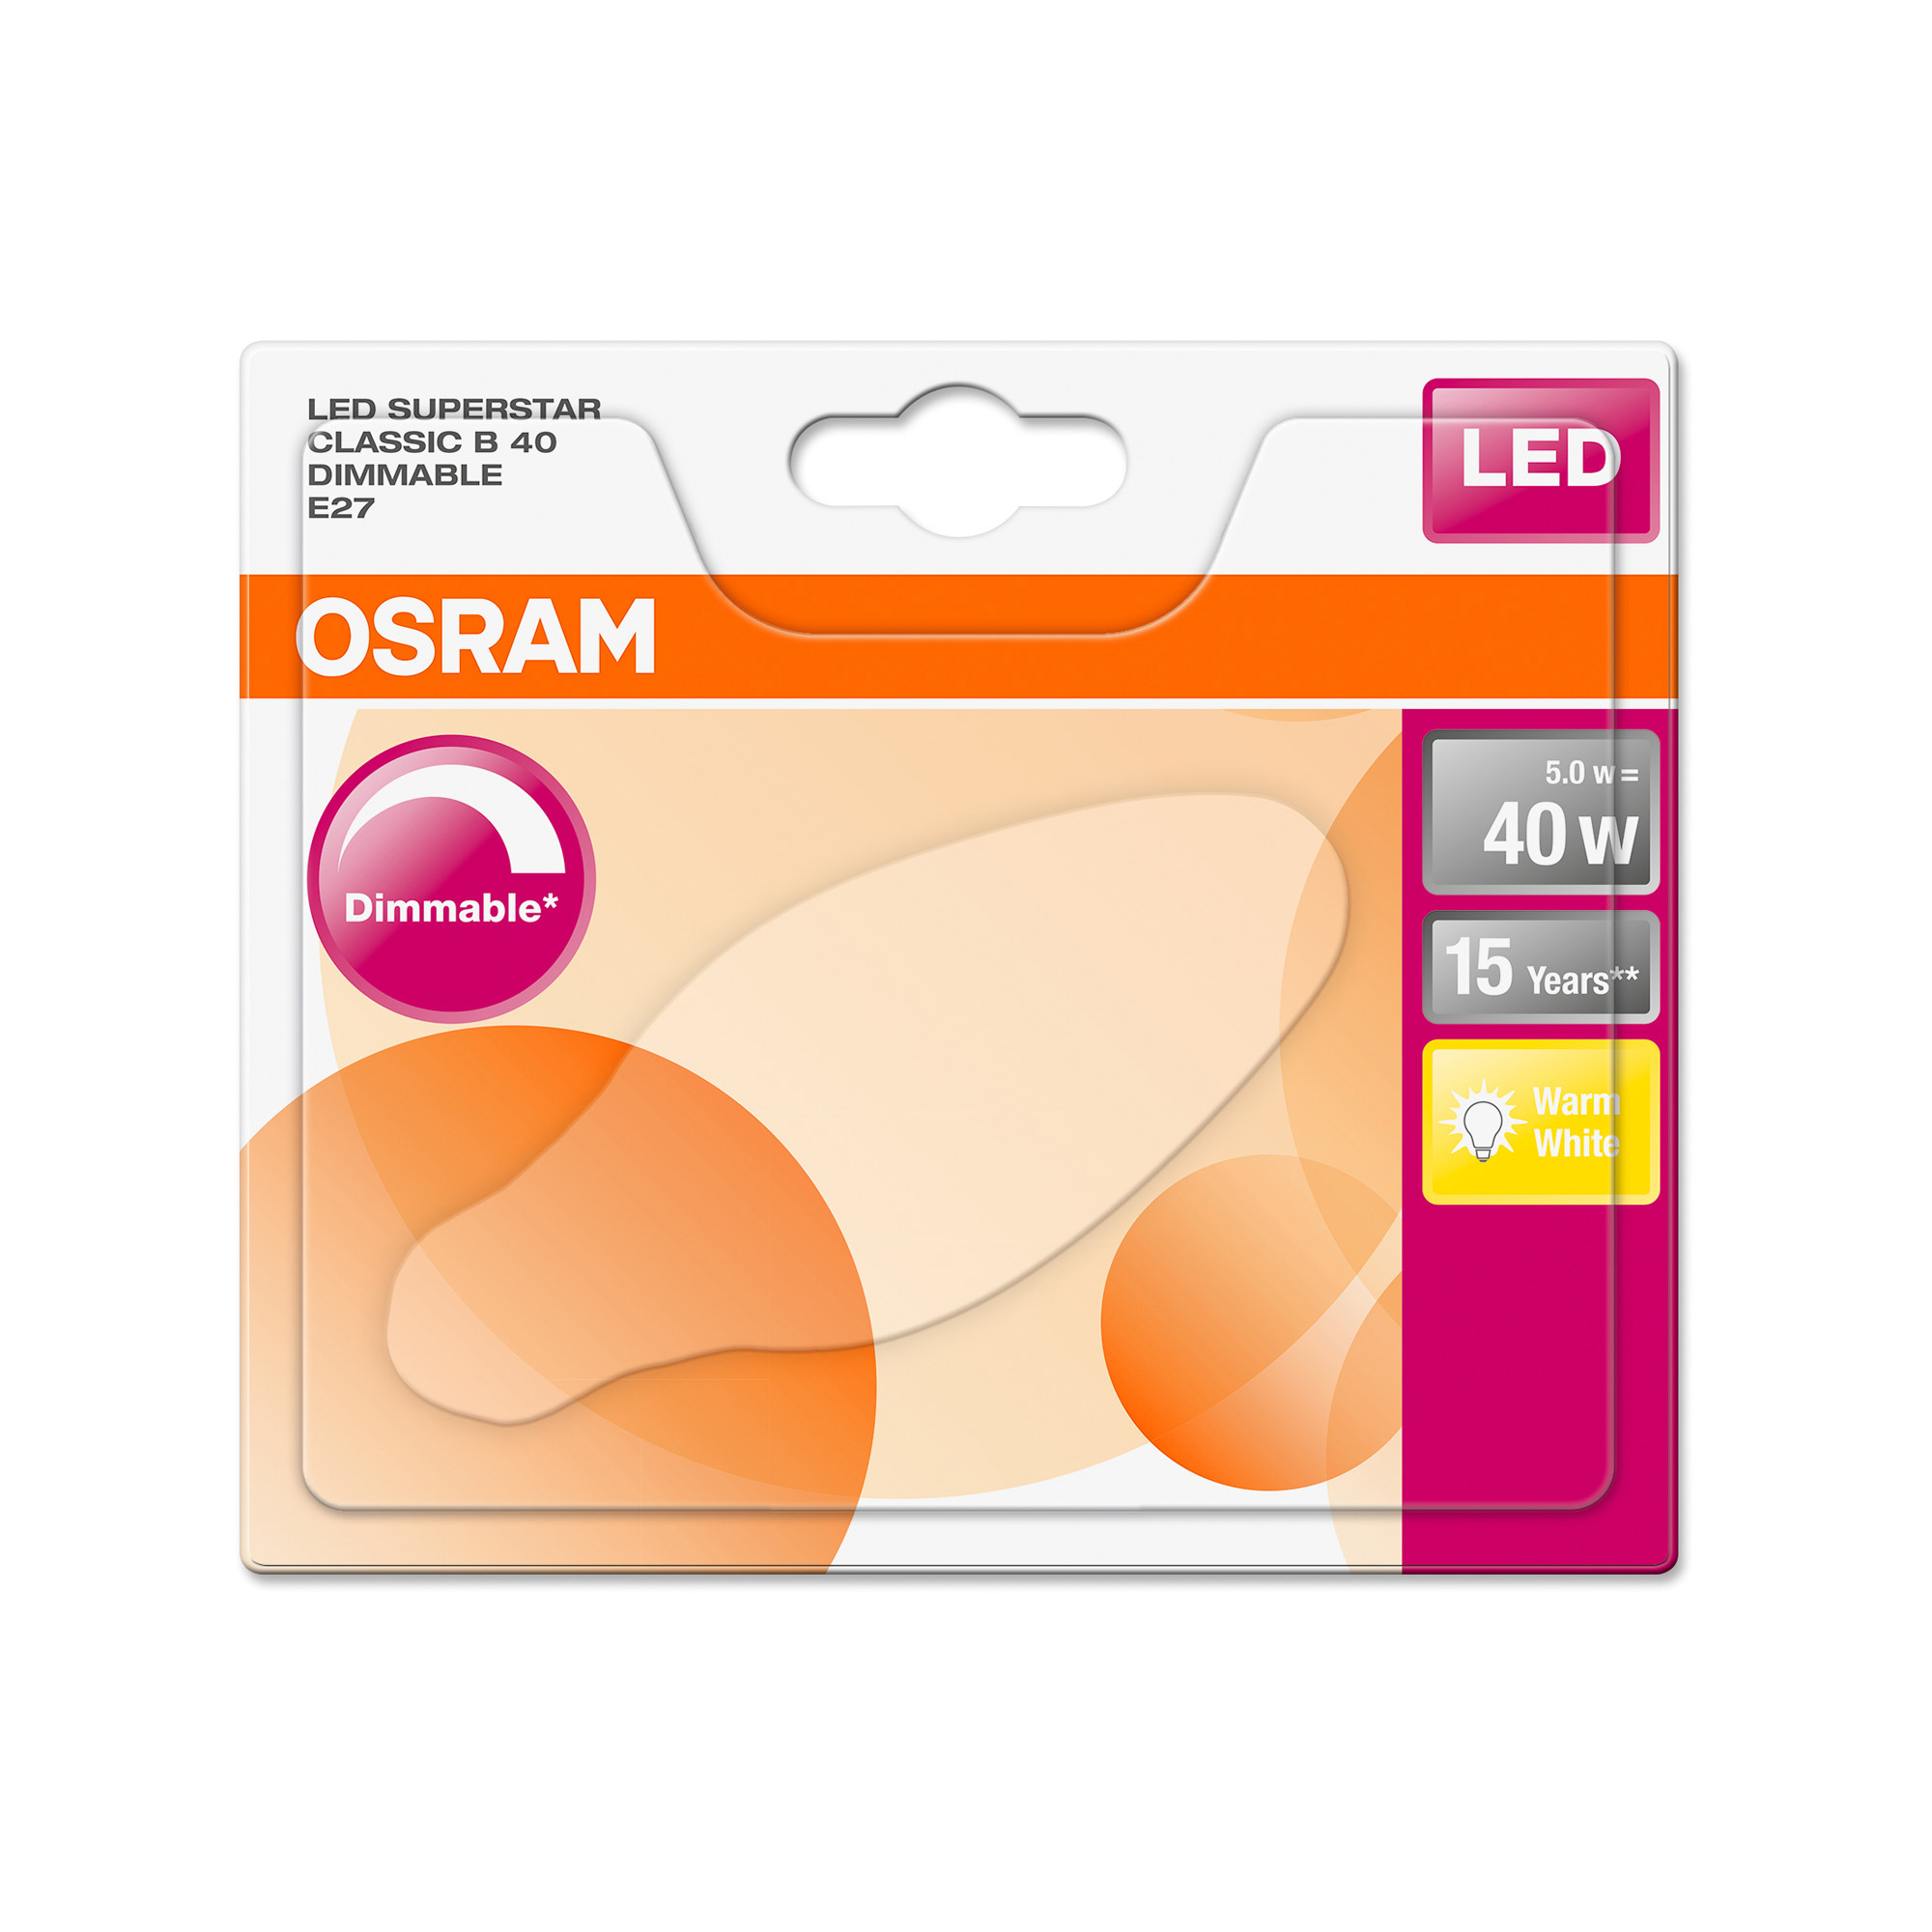 Osram LED SUPERSTAR RETROFIT diffuse DIM CLB 40 5W 827 E14 2700K 470lm